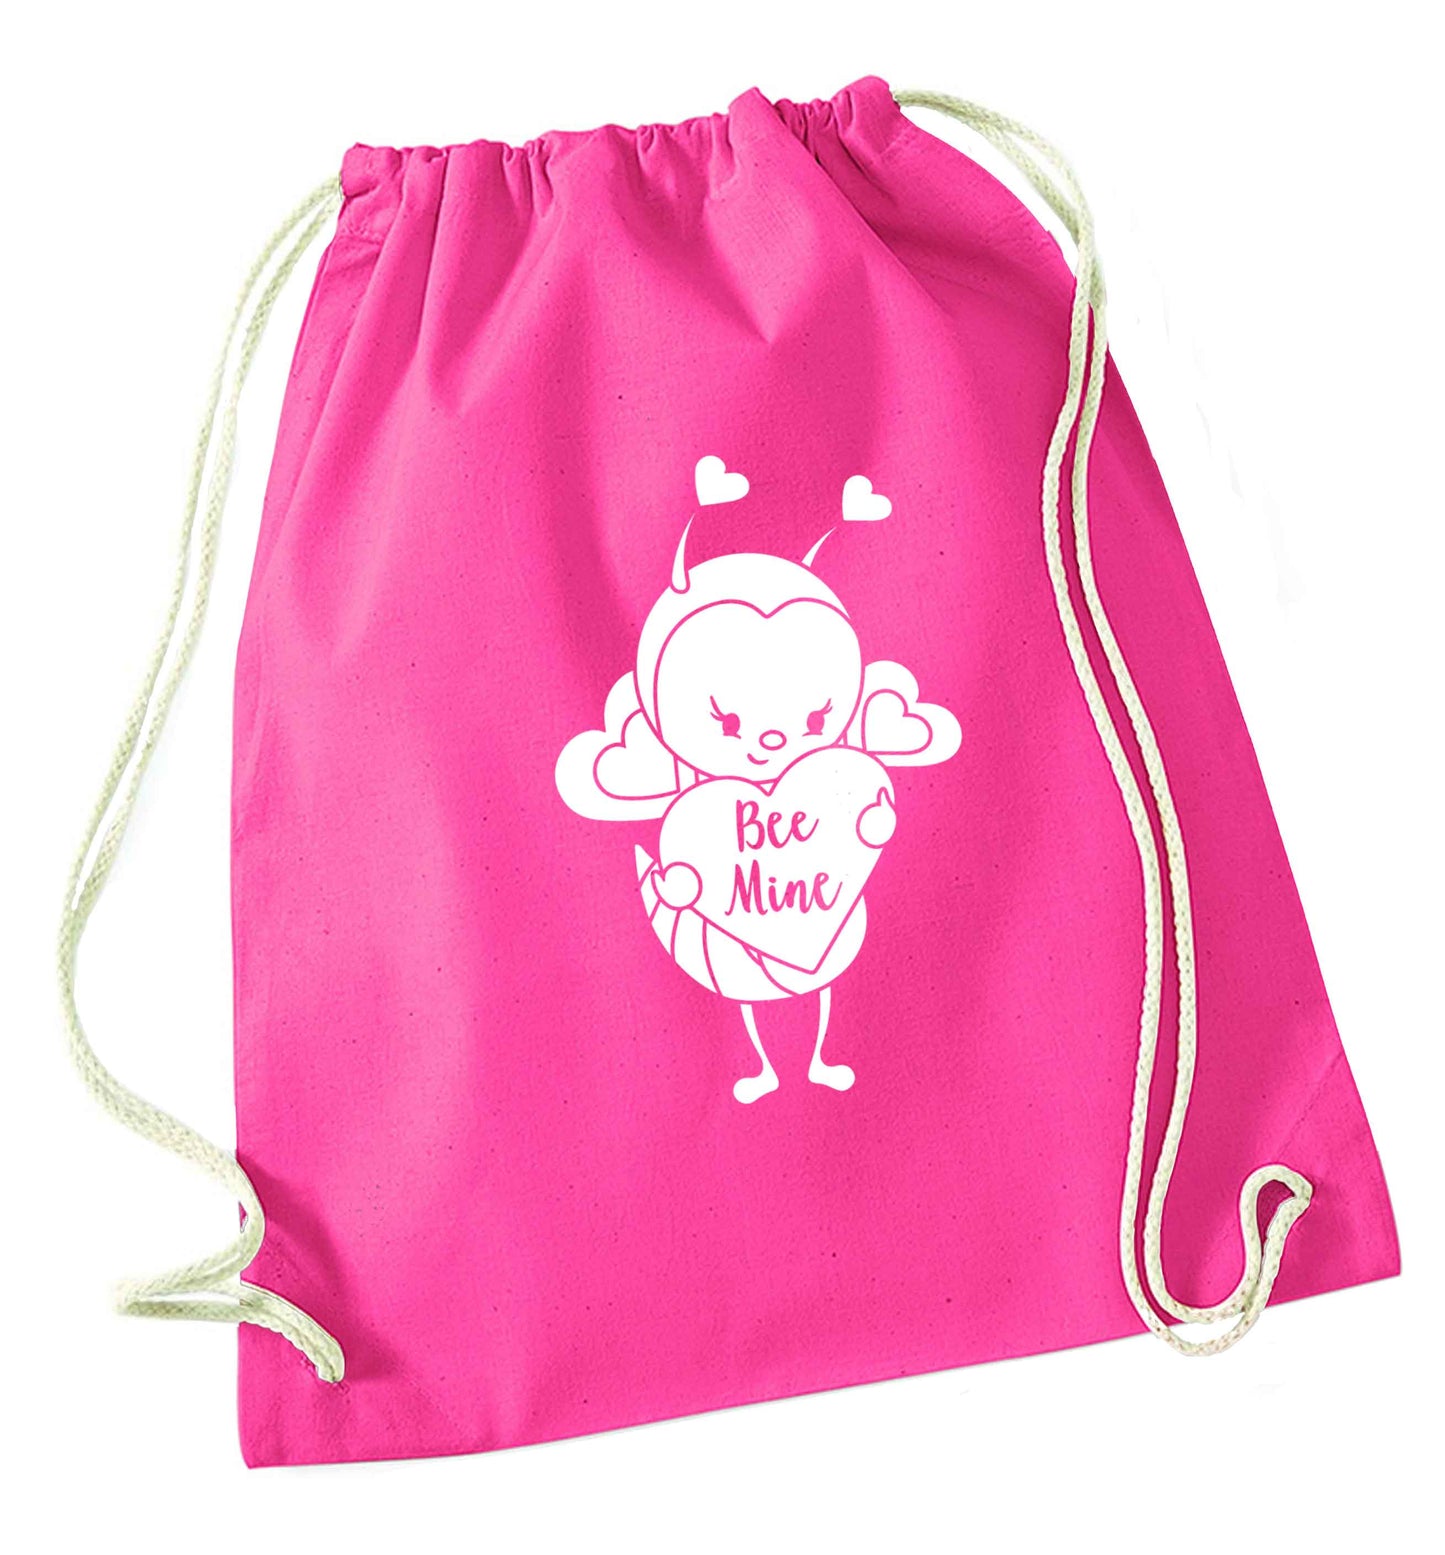 Bee mine pink drawstring bag